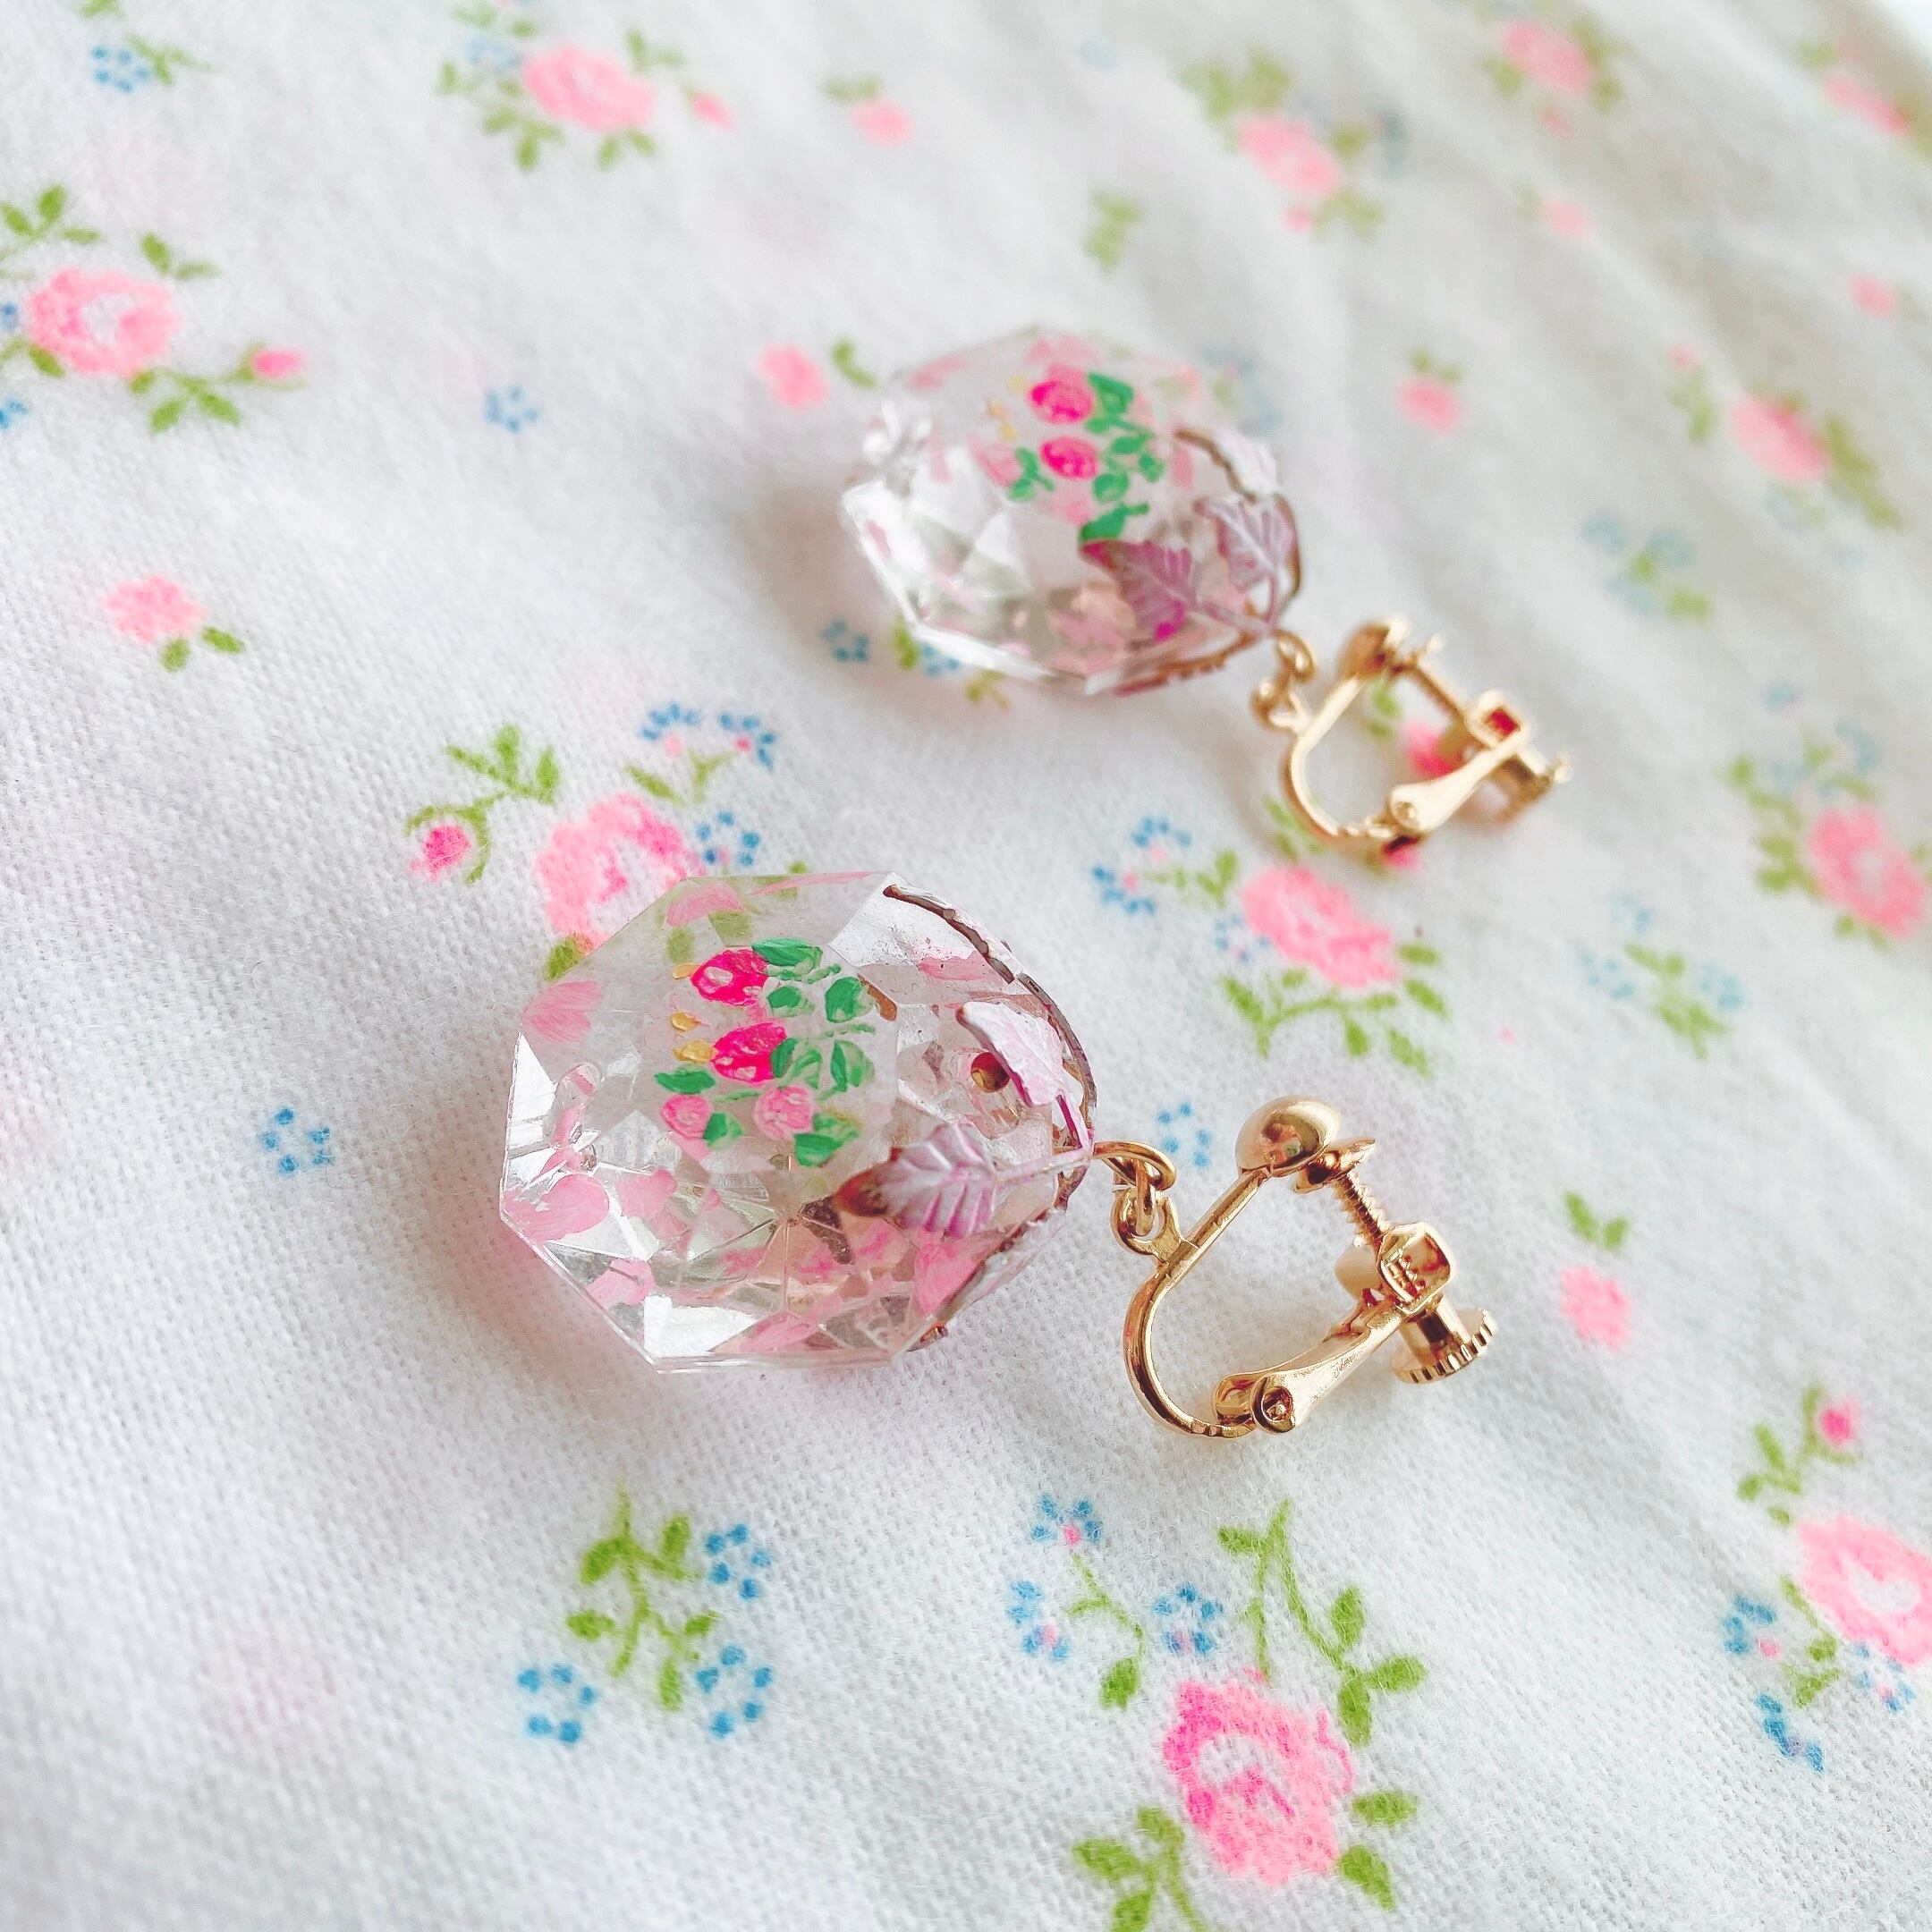 Strawberry hand paint chandelier earrings いちごばたけのイヤリング b.